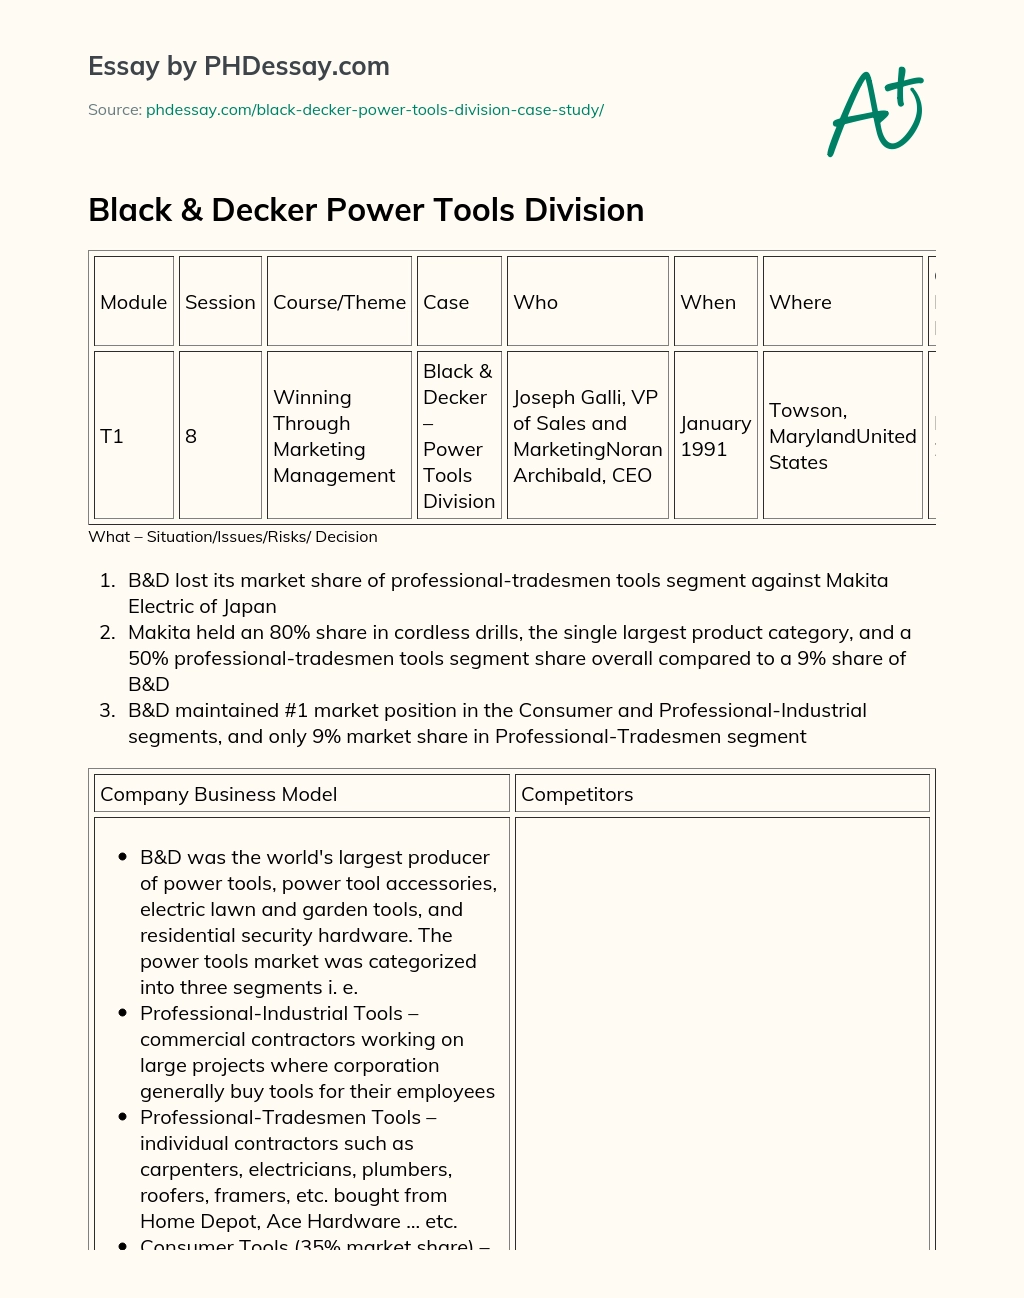 Black & Decker Power Tools Division essay